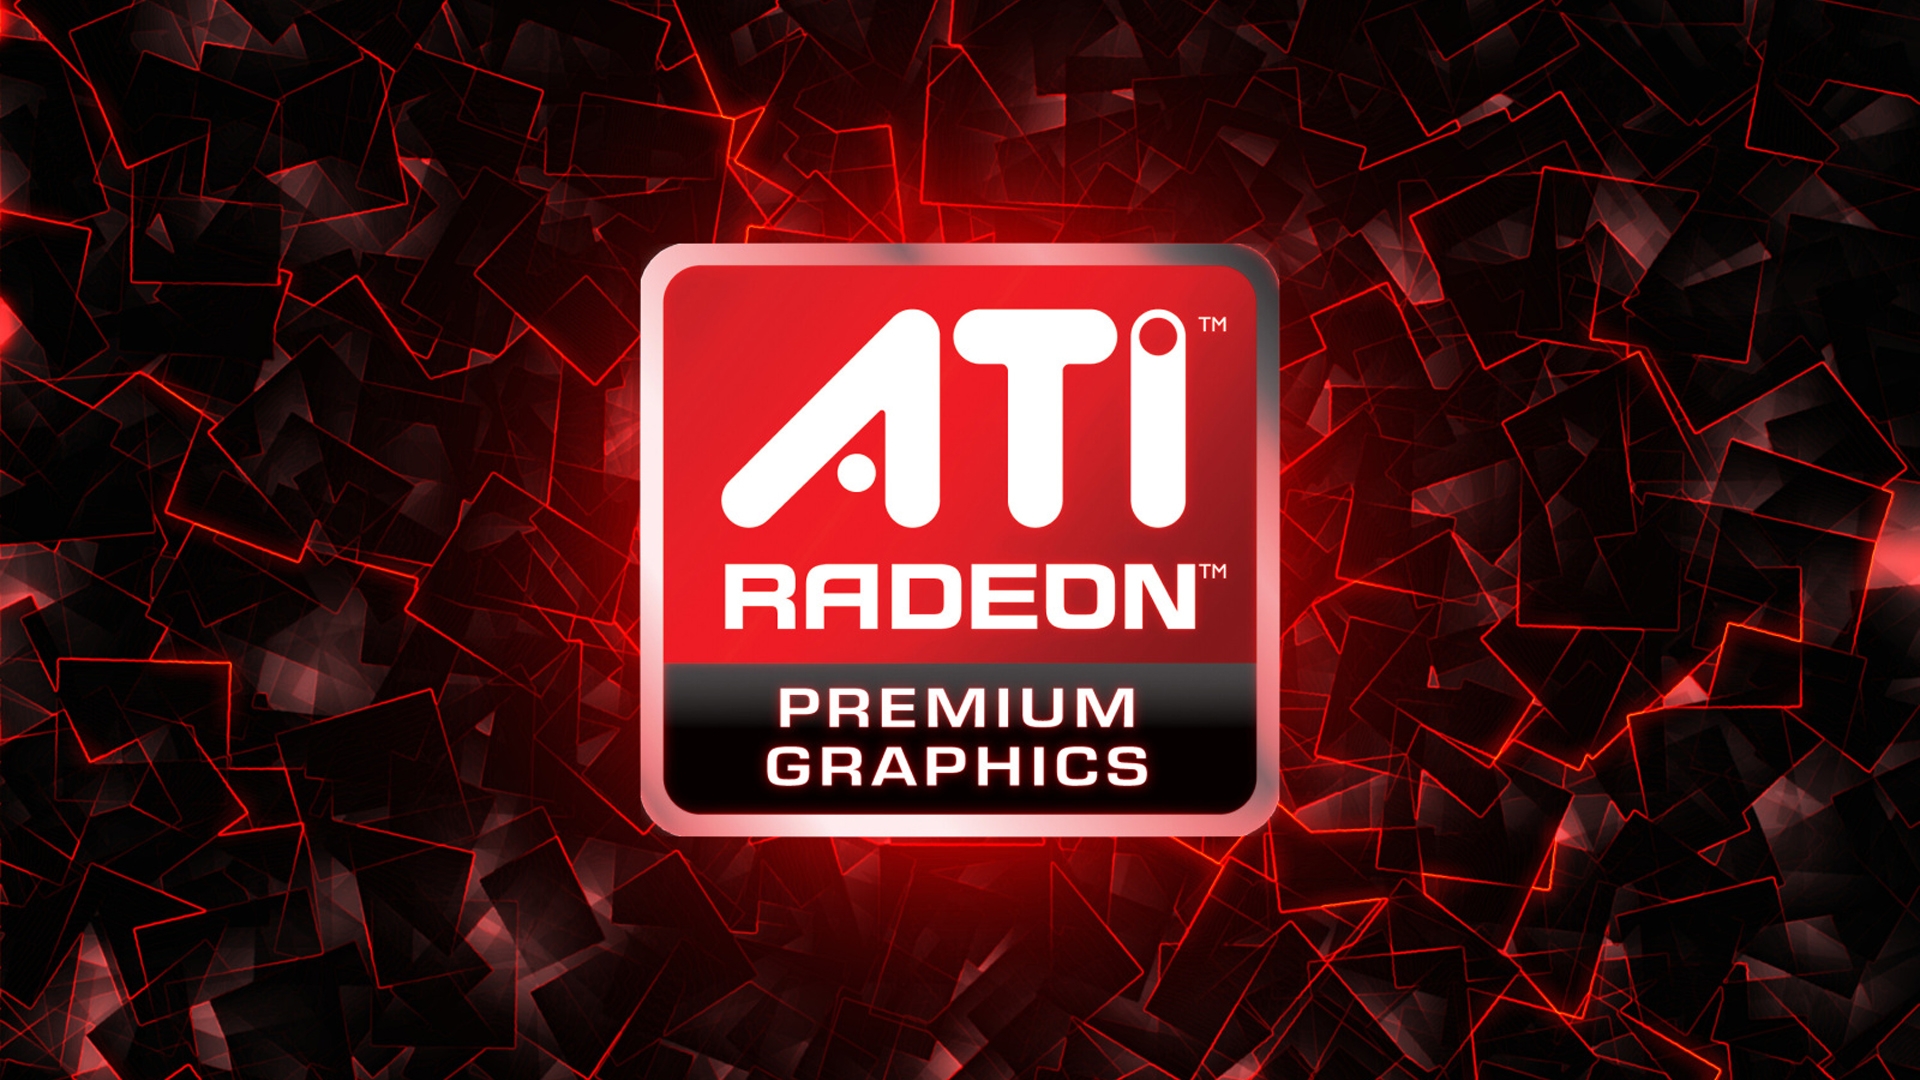 Ati Radeon Premium Graphics Hq Wallpaper High